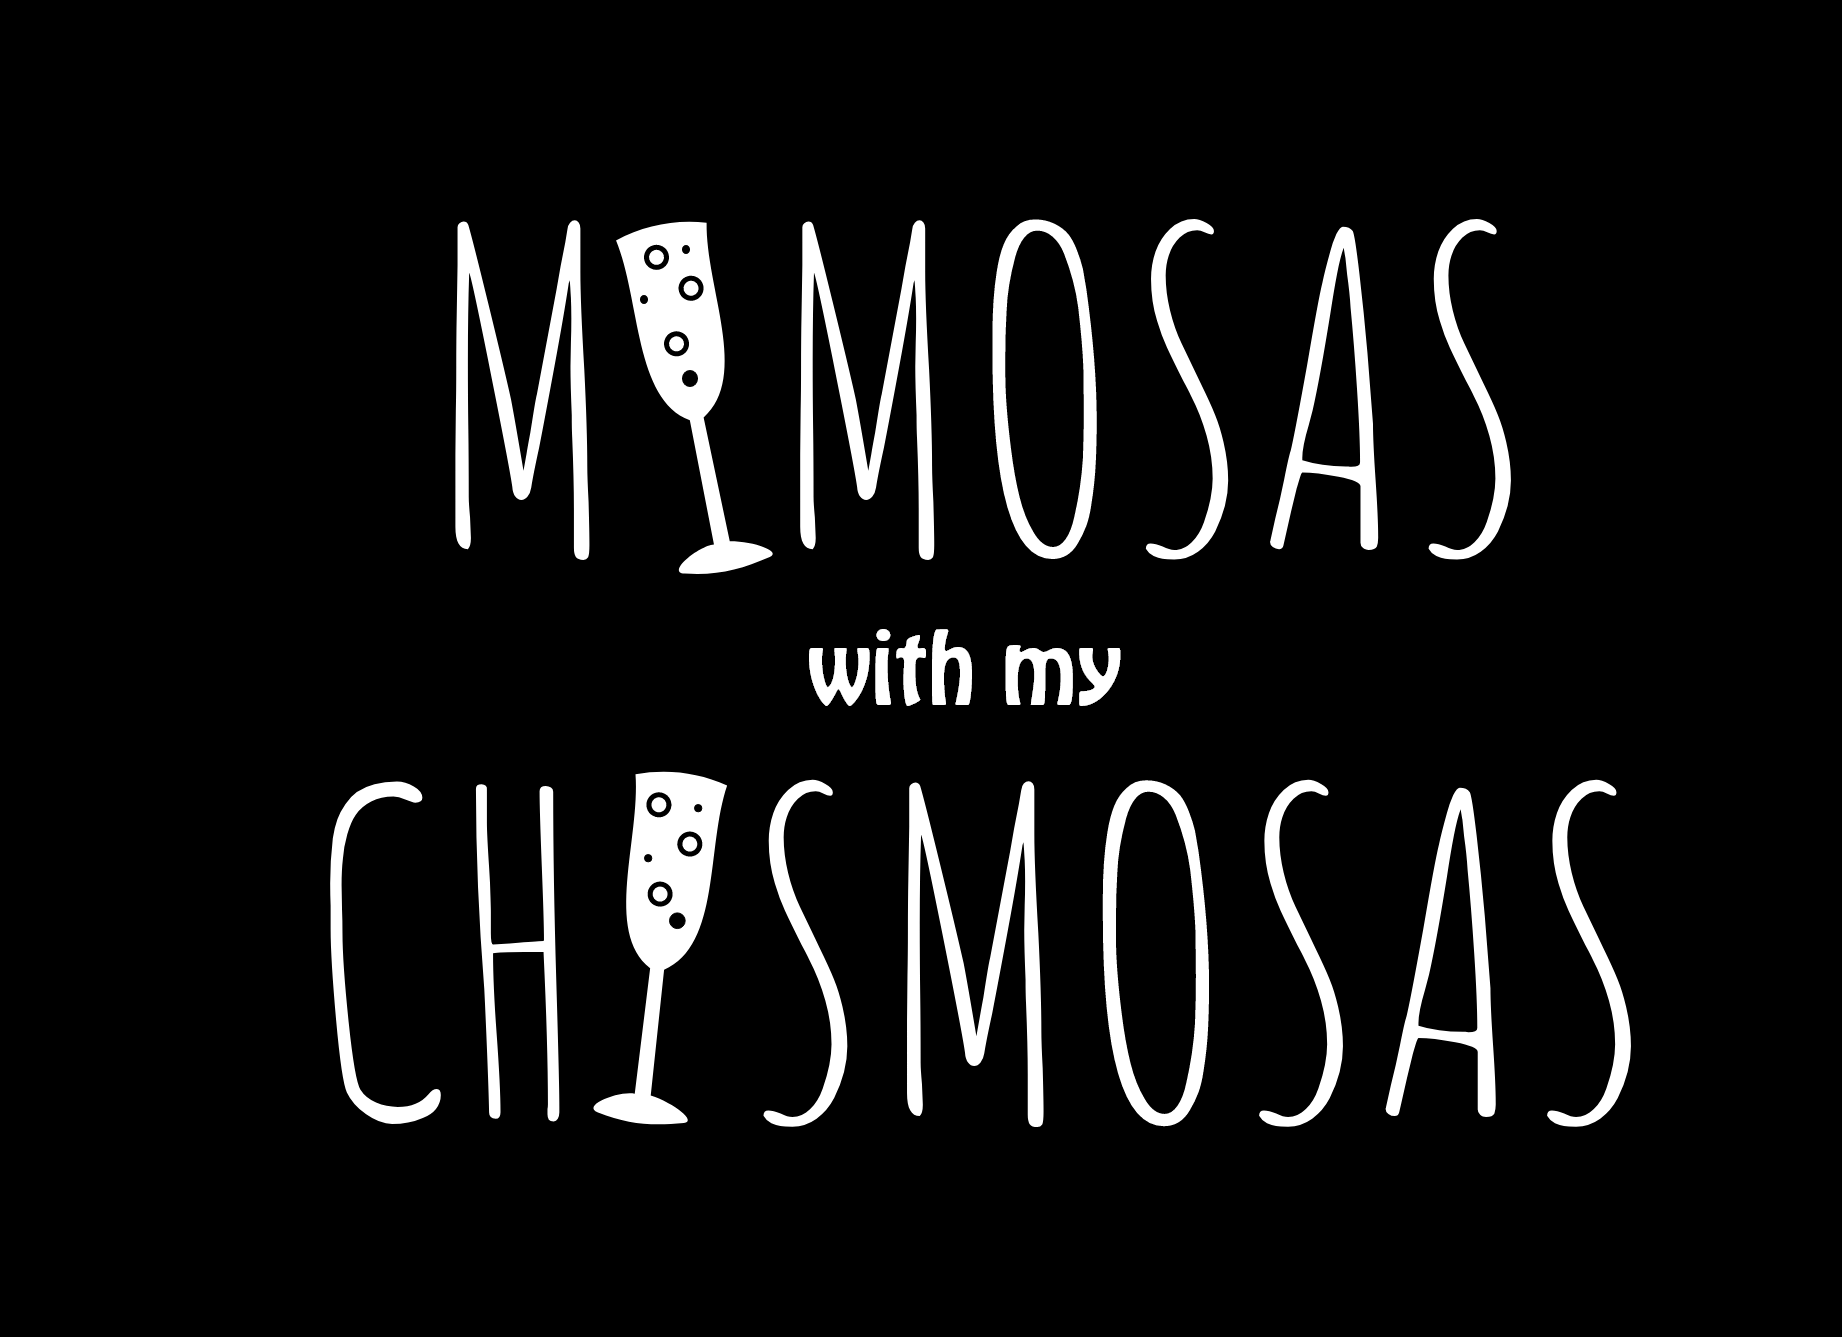 Mimosas with my Chismosas - Black Tee